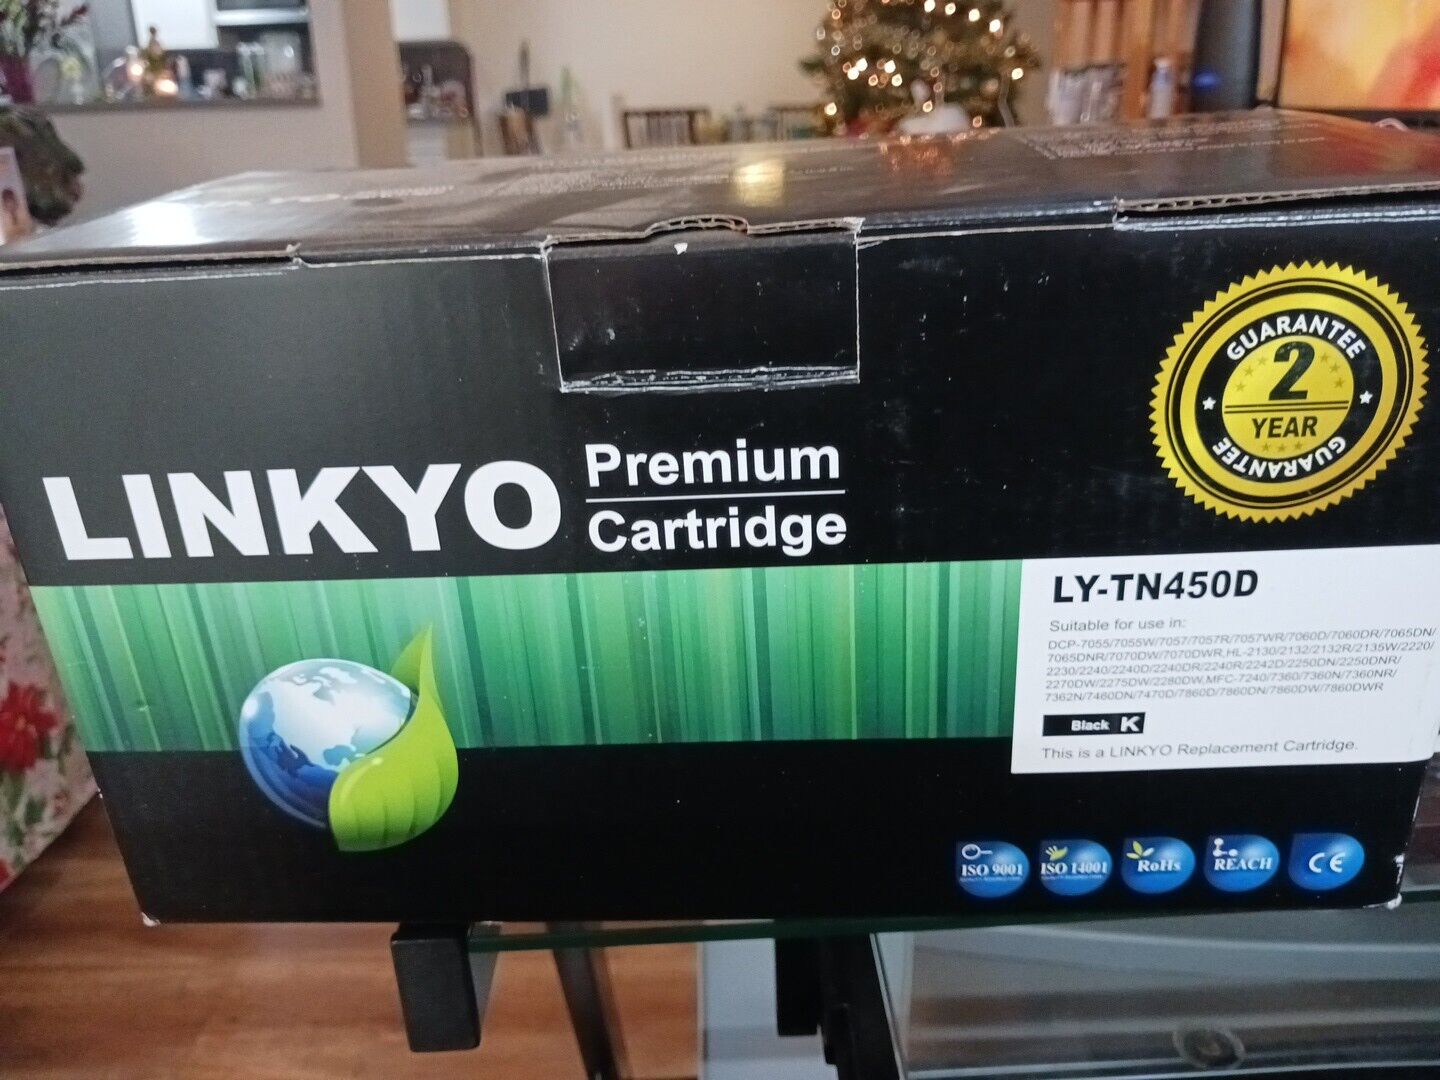 NEW Linkyo Premium Cartridge Black LY-TN450D